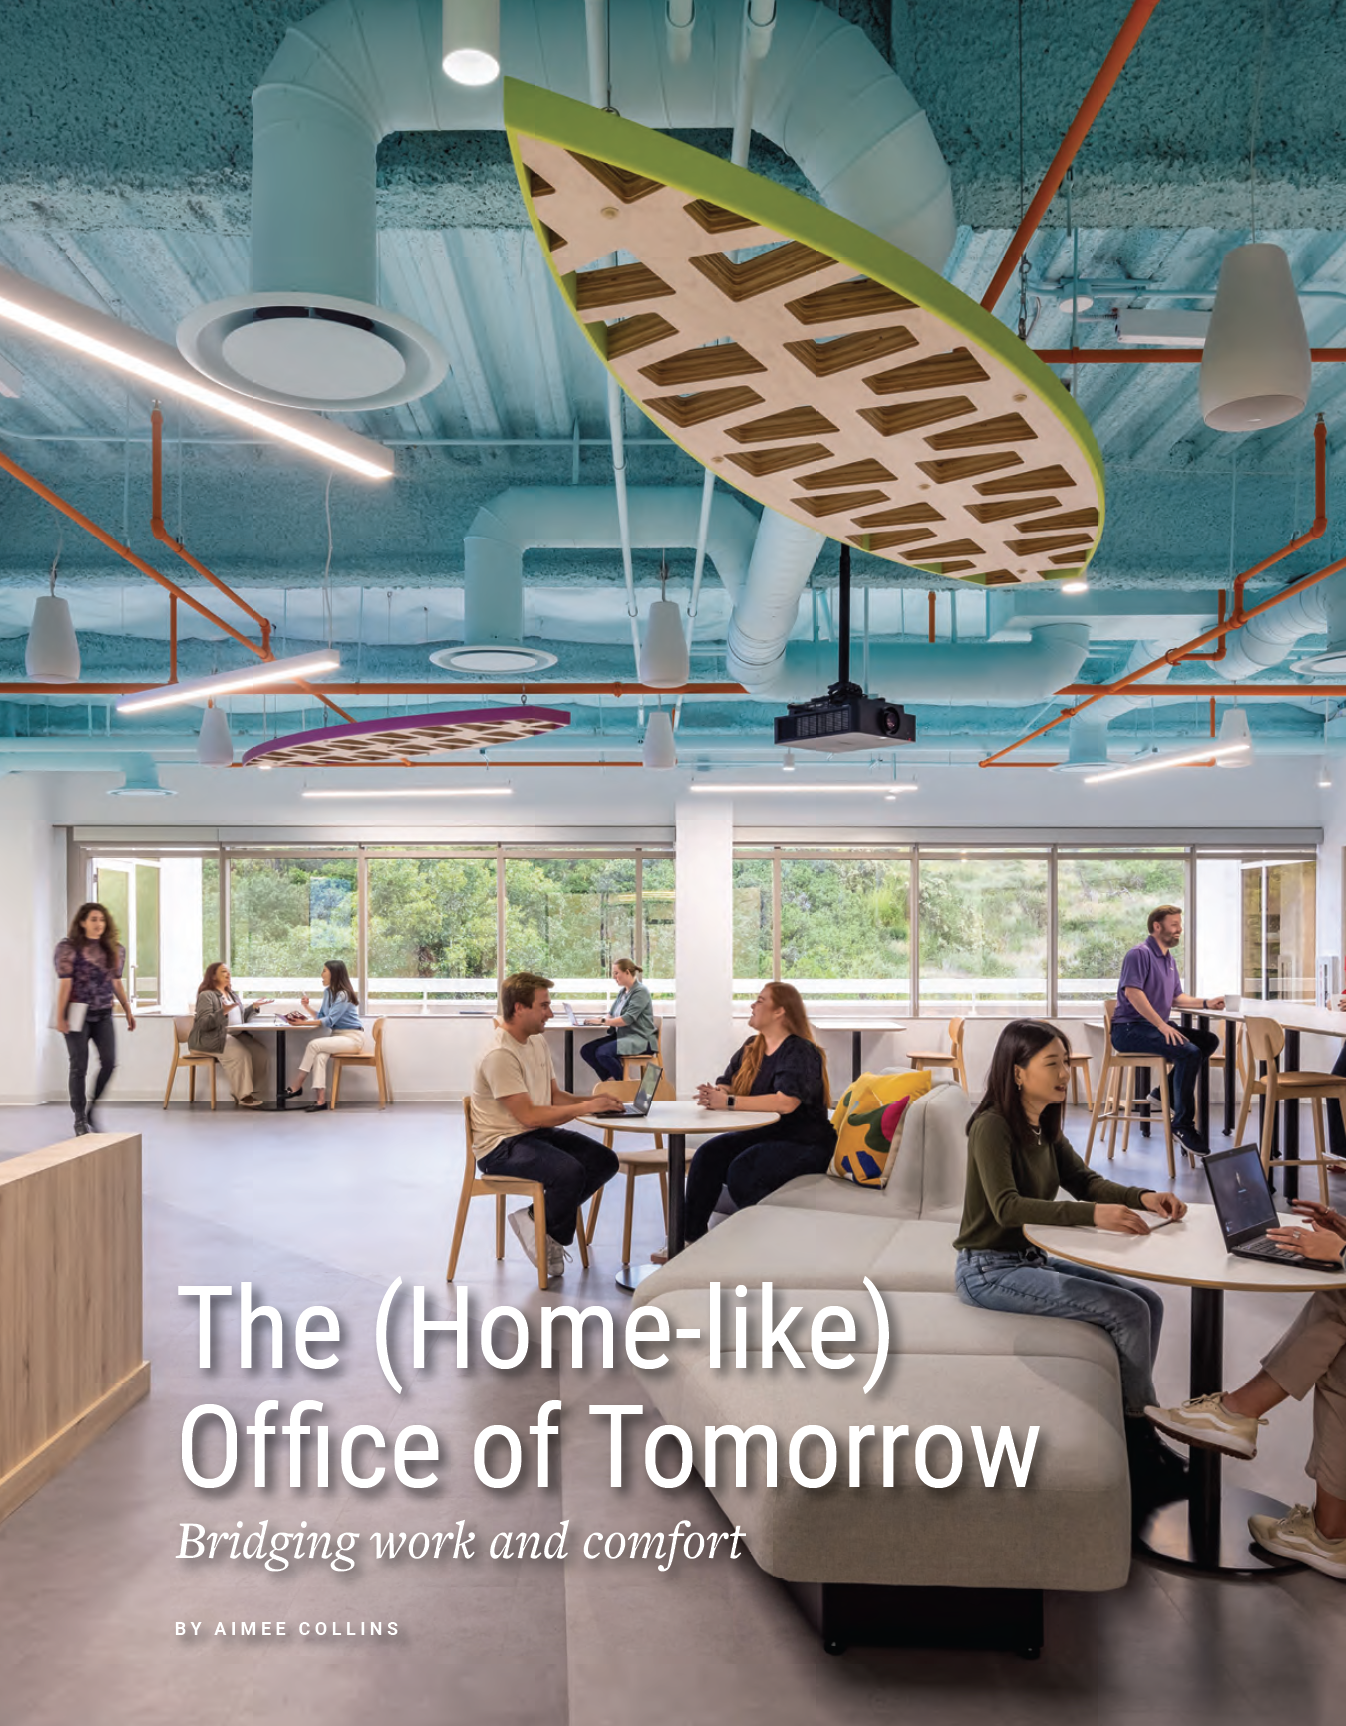 The (Home-like) Office of Tomorrow